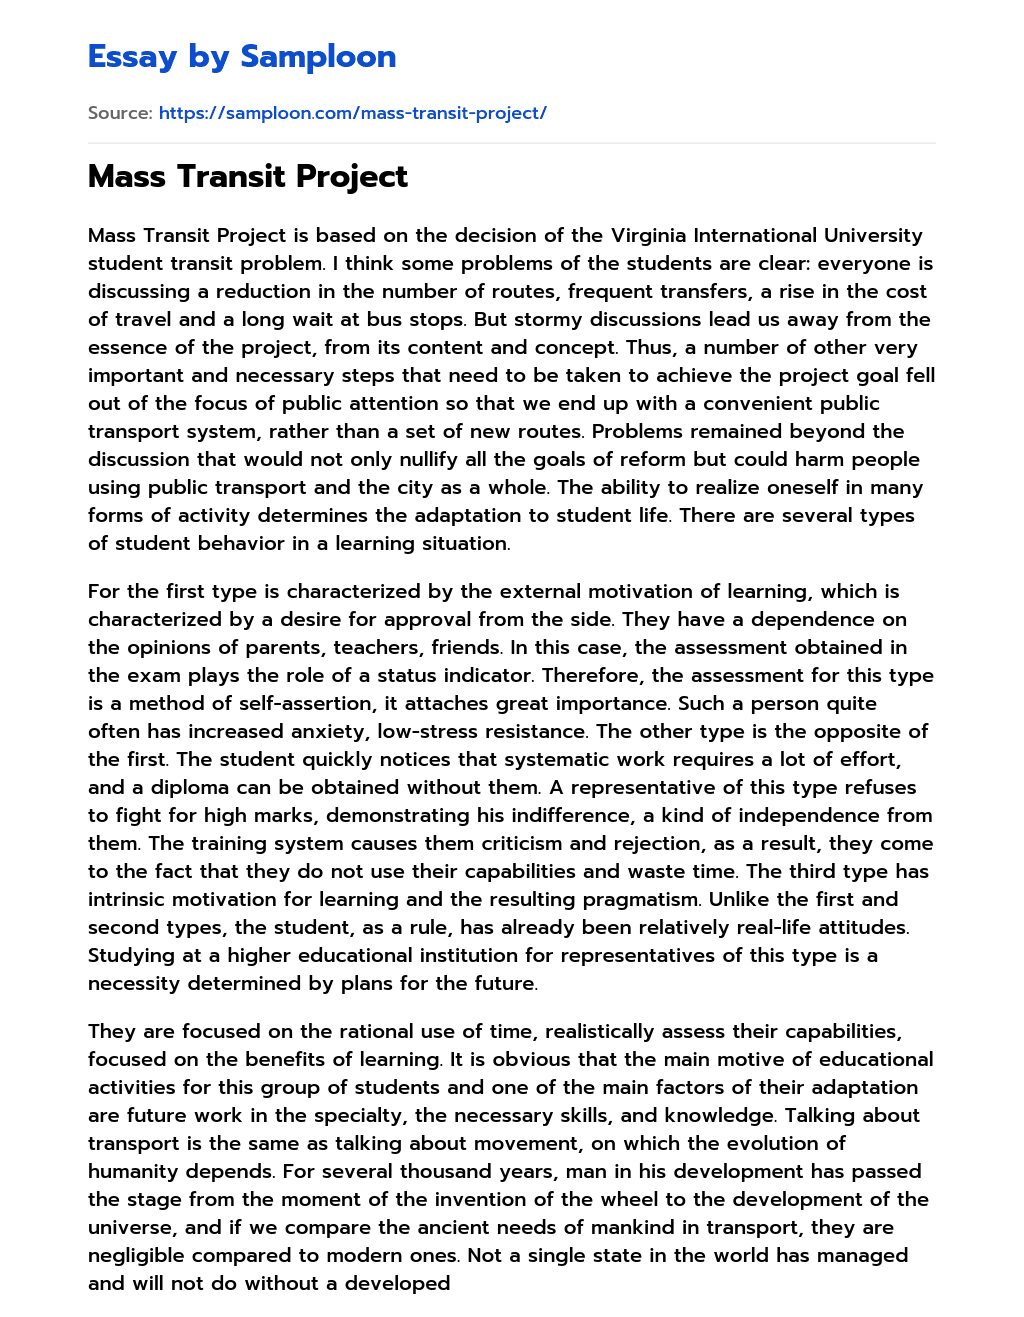 Mass Transit Project essay